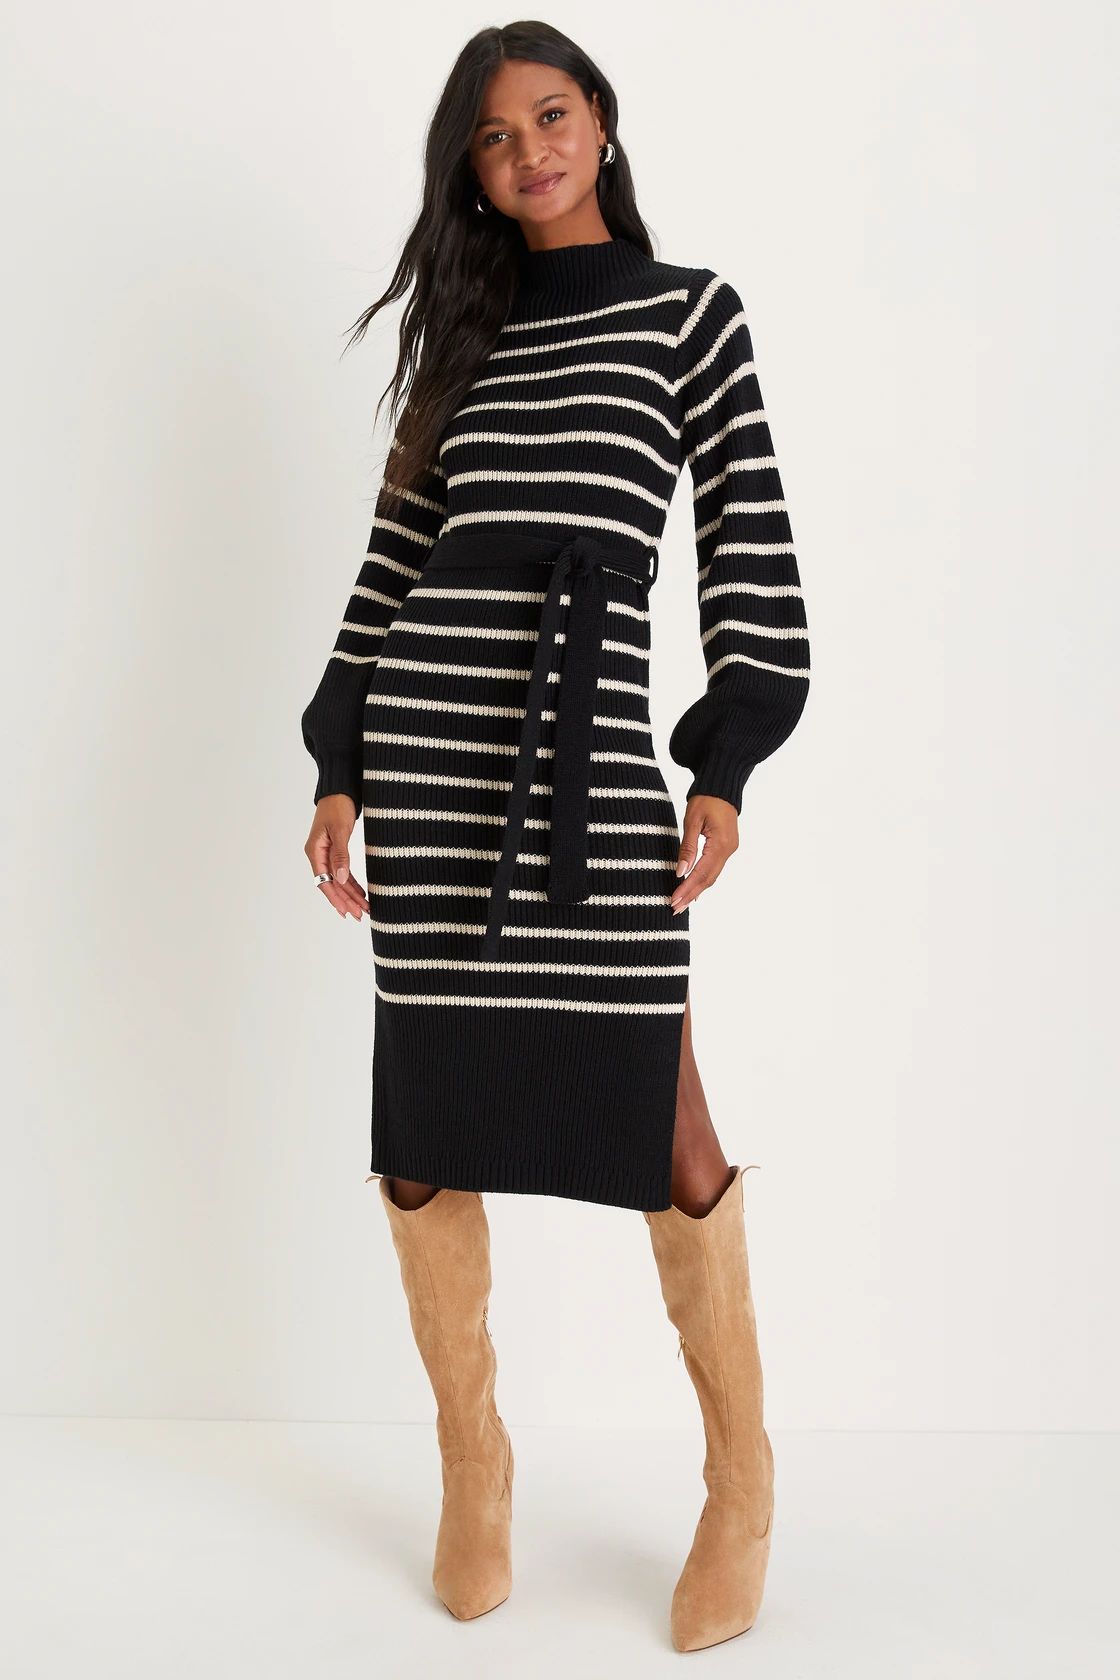 Stripe Things Up Black Striped Mock Neck Bodycon Sweater Dress | Lulus